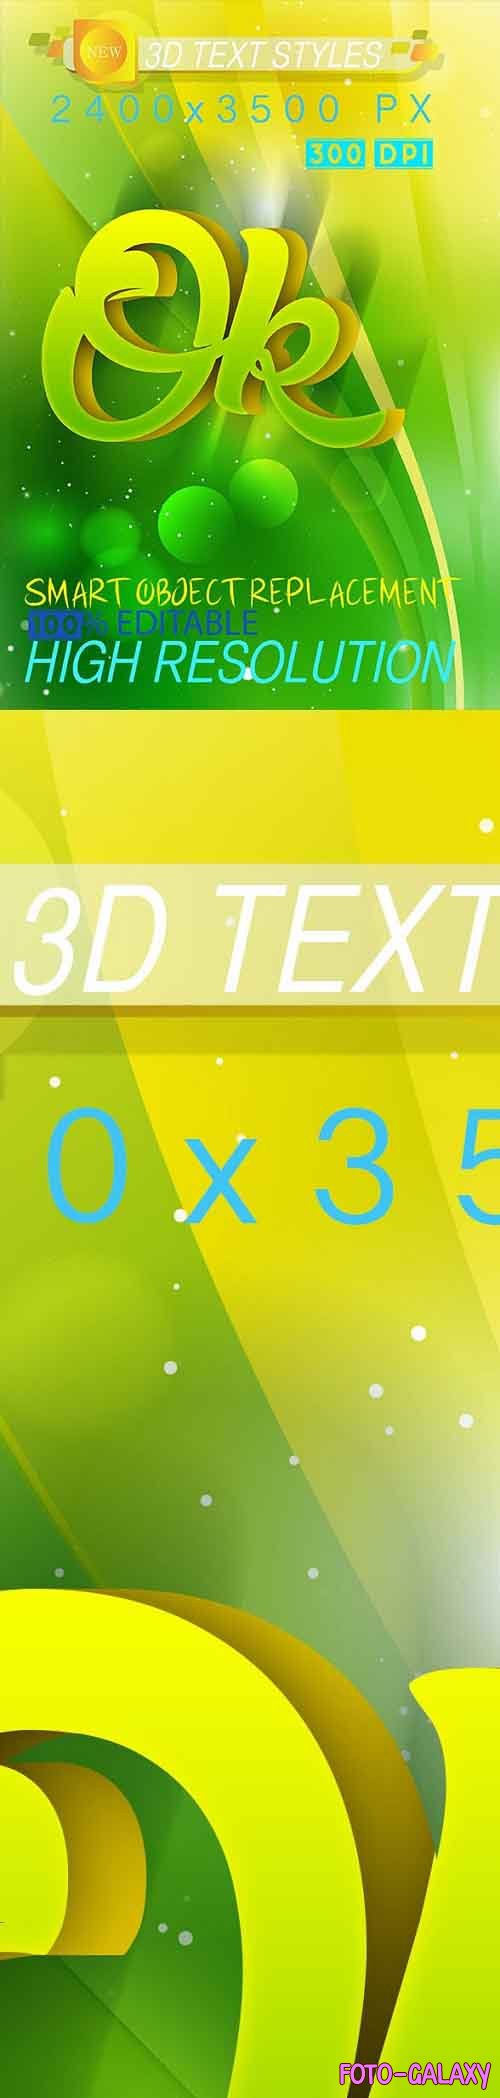 GraphicRiver - 3D Text Effect 16_9_20 28578271